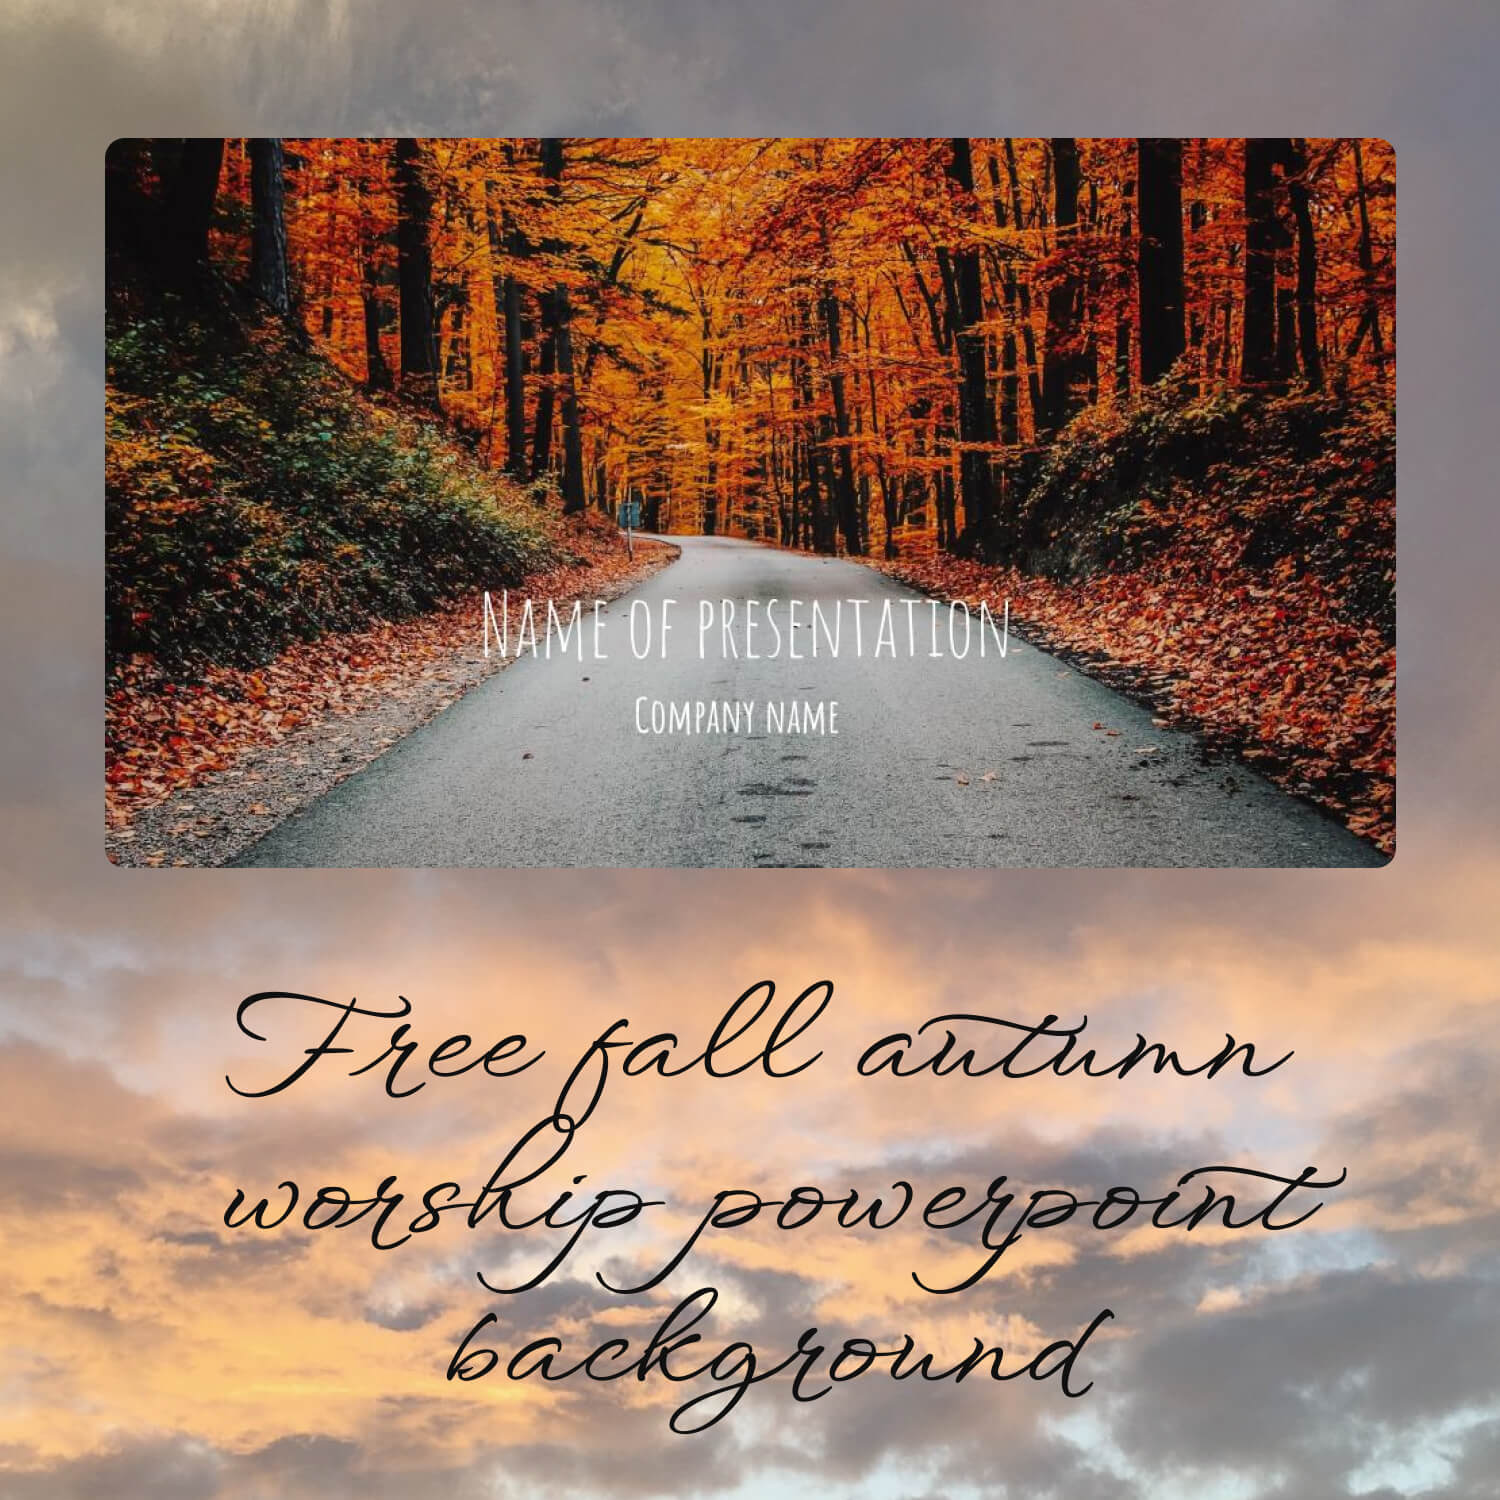 Free Fall Autumn Worship Powerpoint Background.